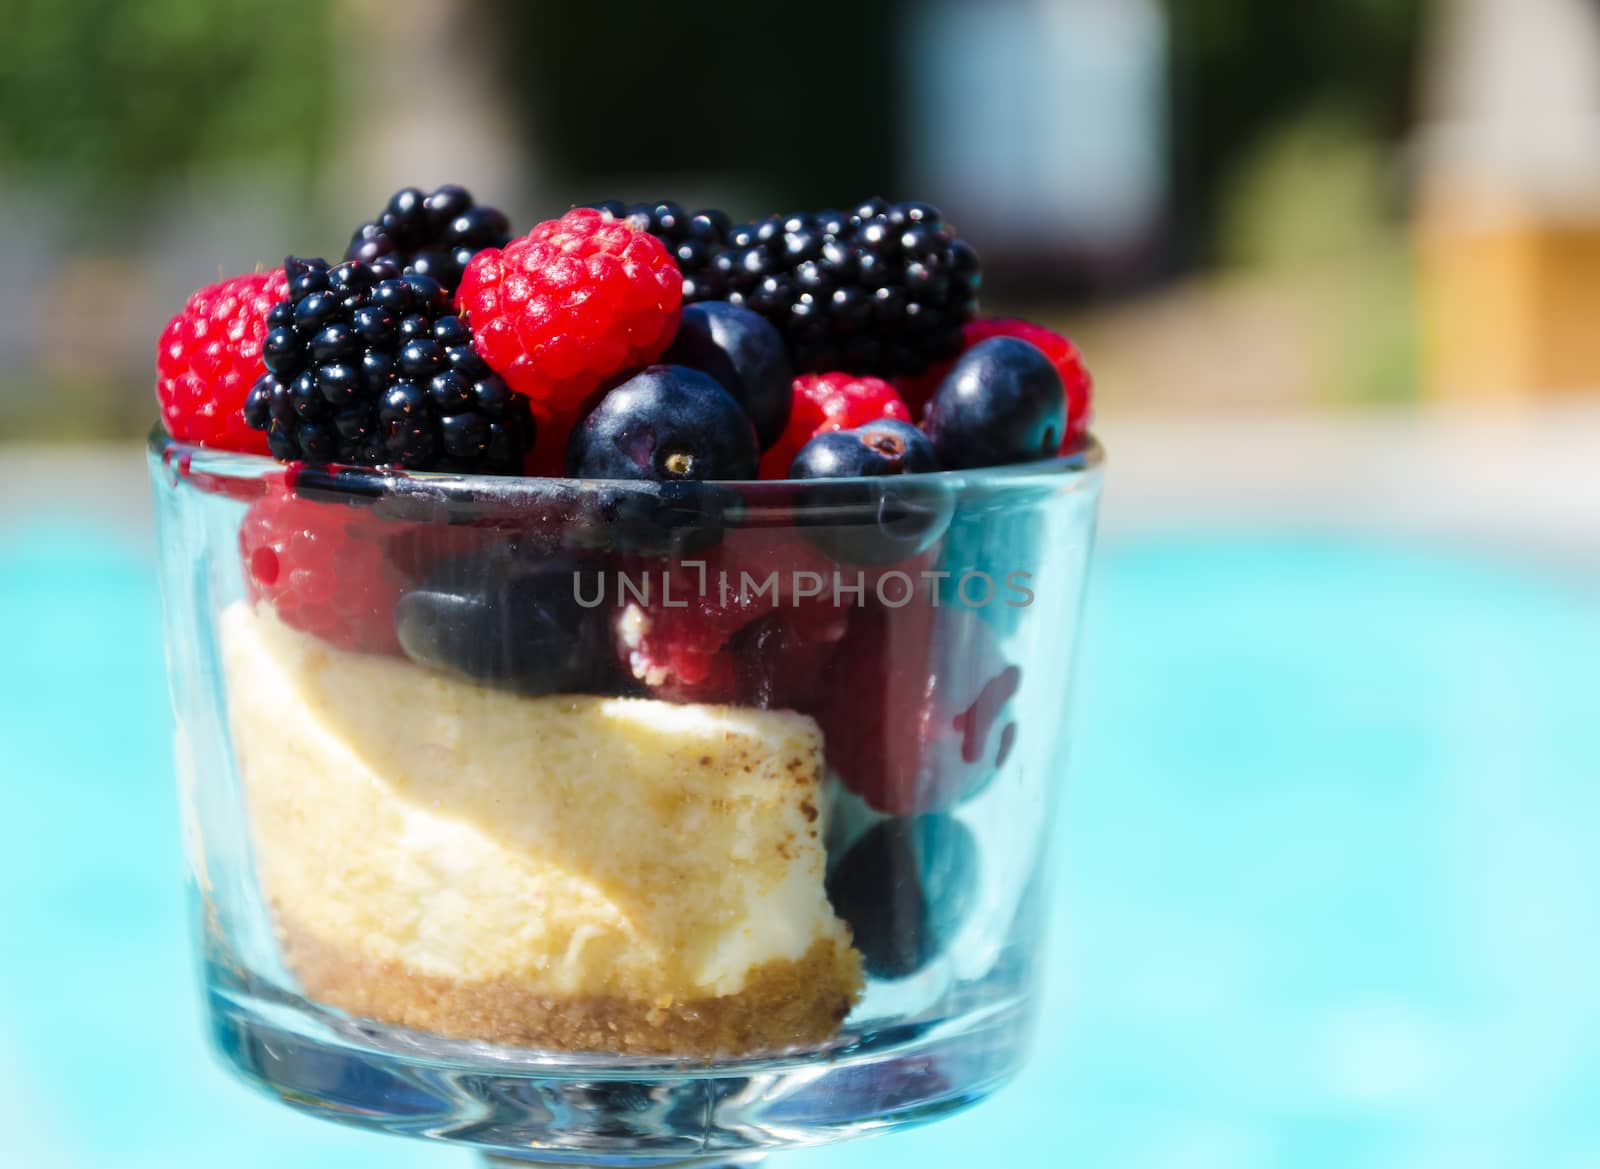 Morning dessert with berries by EllenSmile